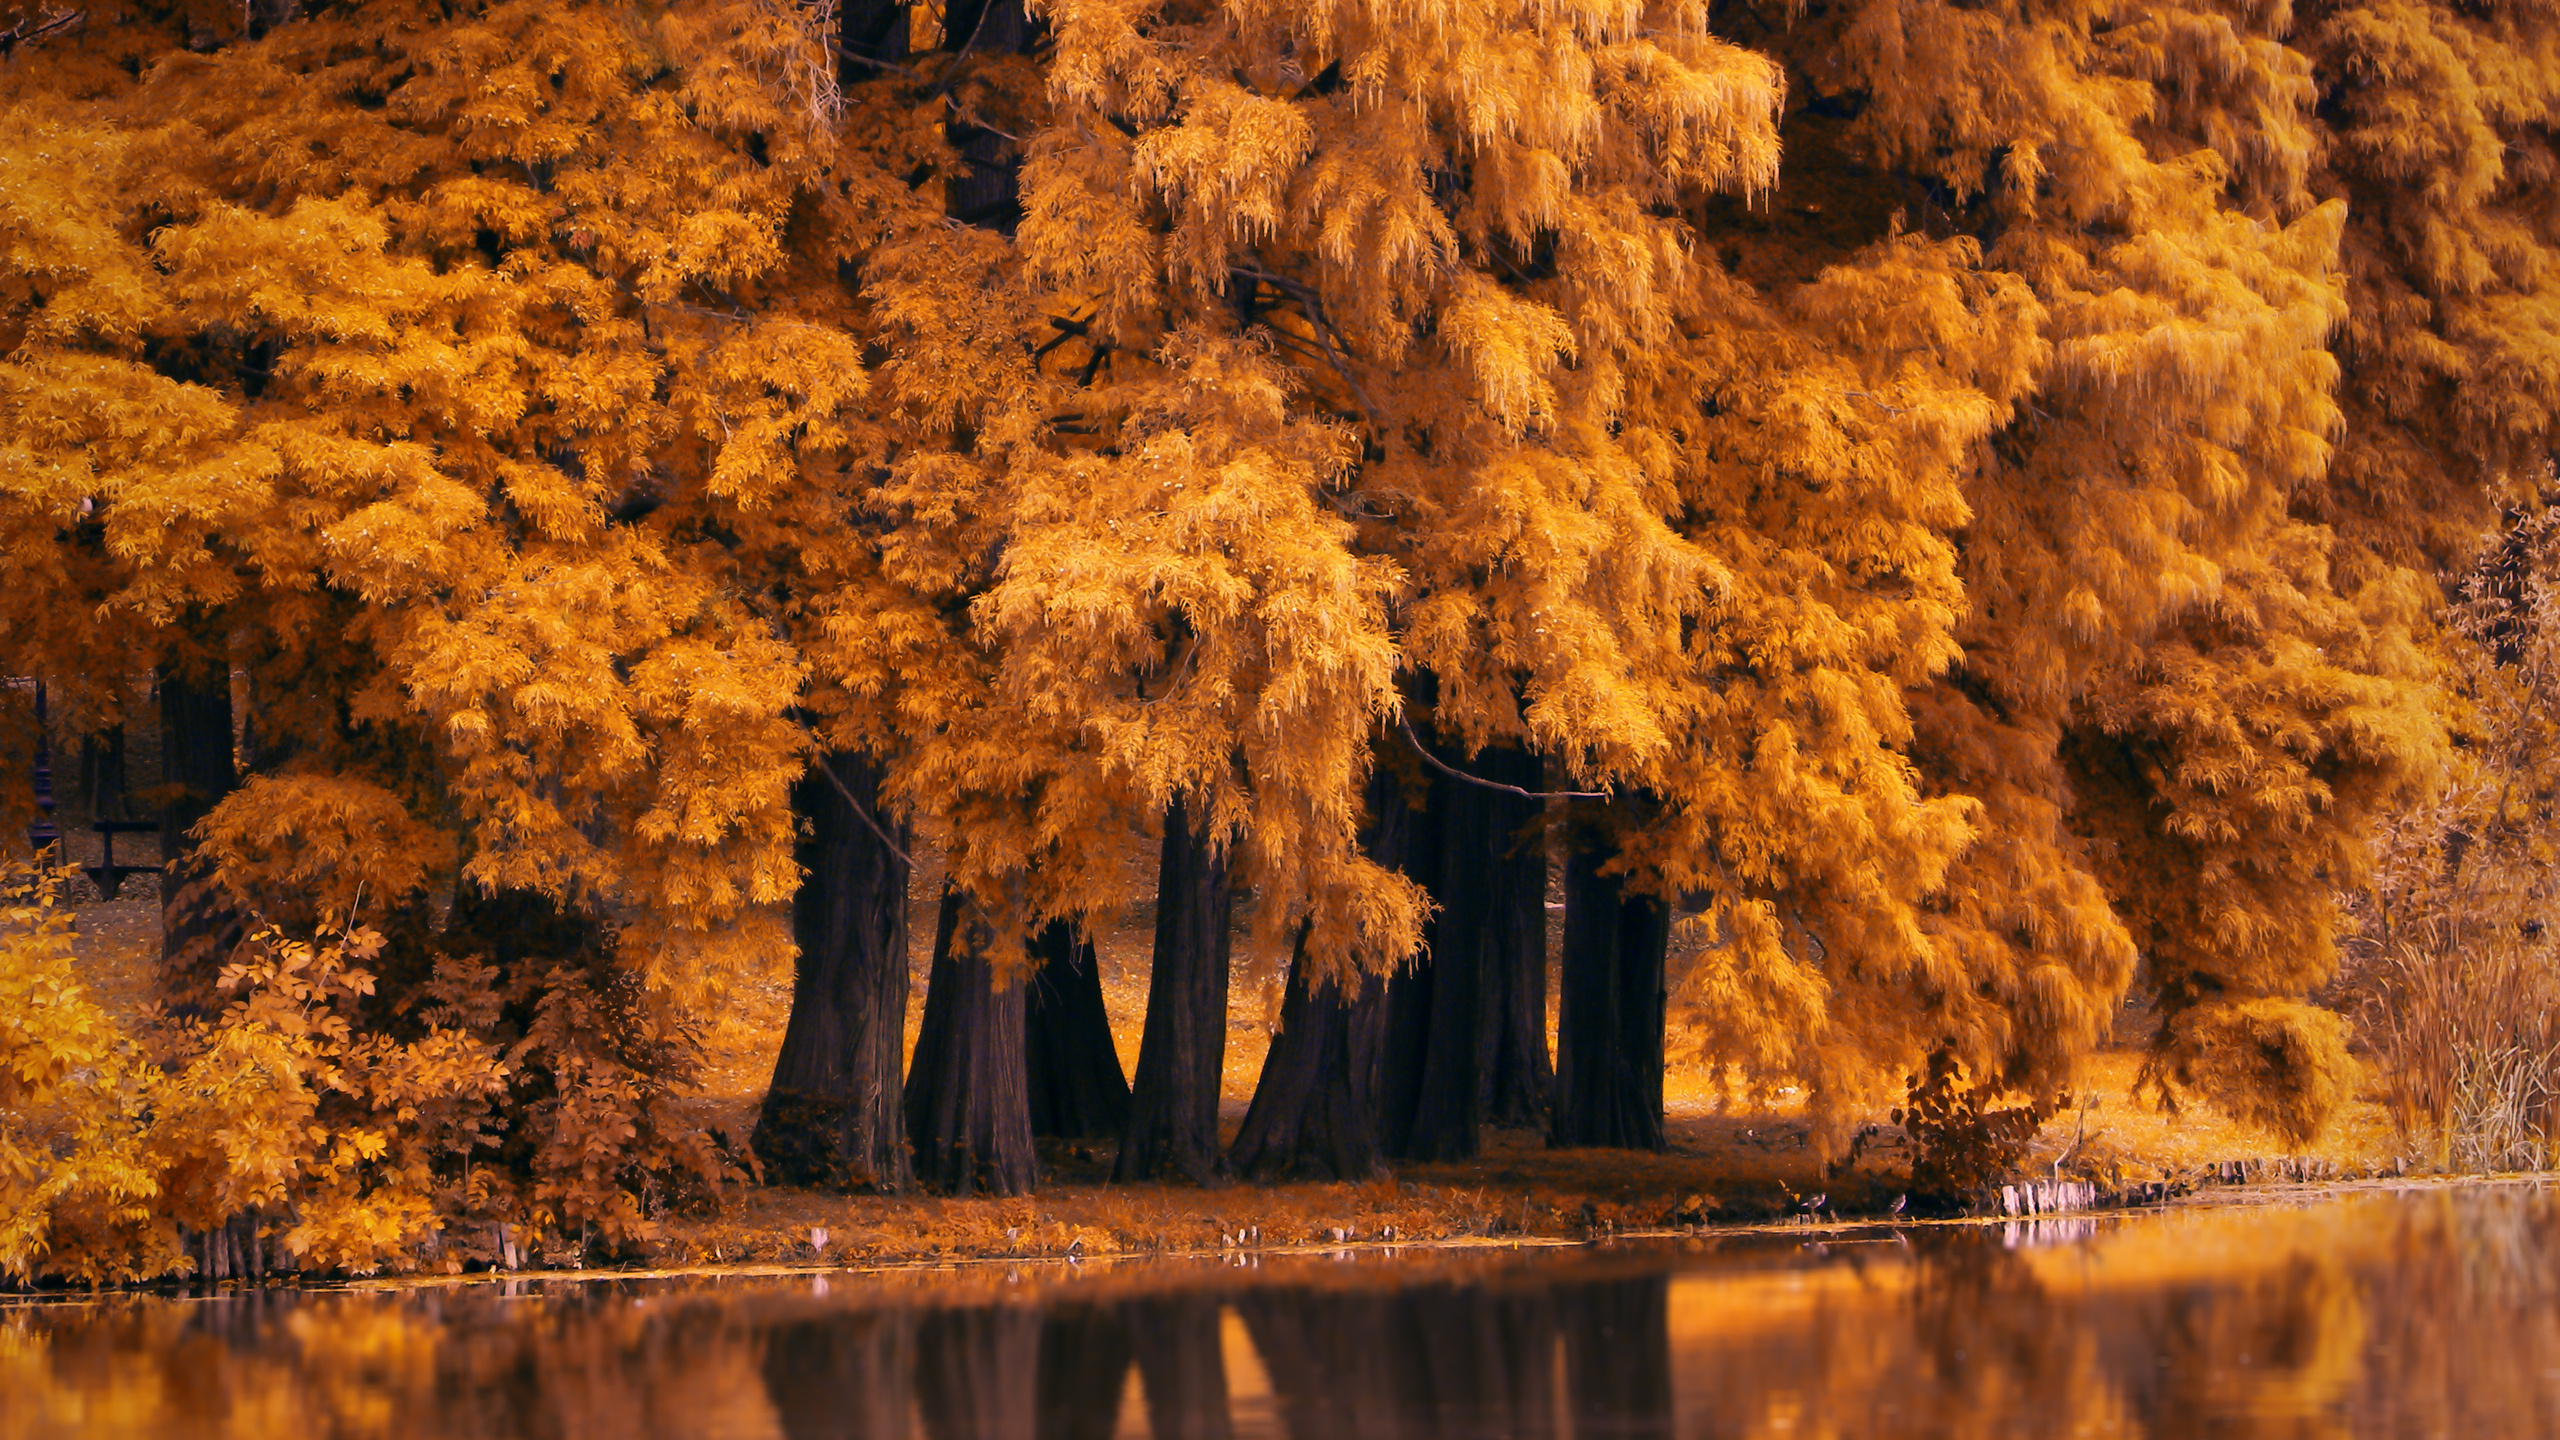 1440p autumn majesty, Natural splendor, Fallen leaves carpet, Woodland serenity, Seasonal cycle, 2560x1440 HD Desktop